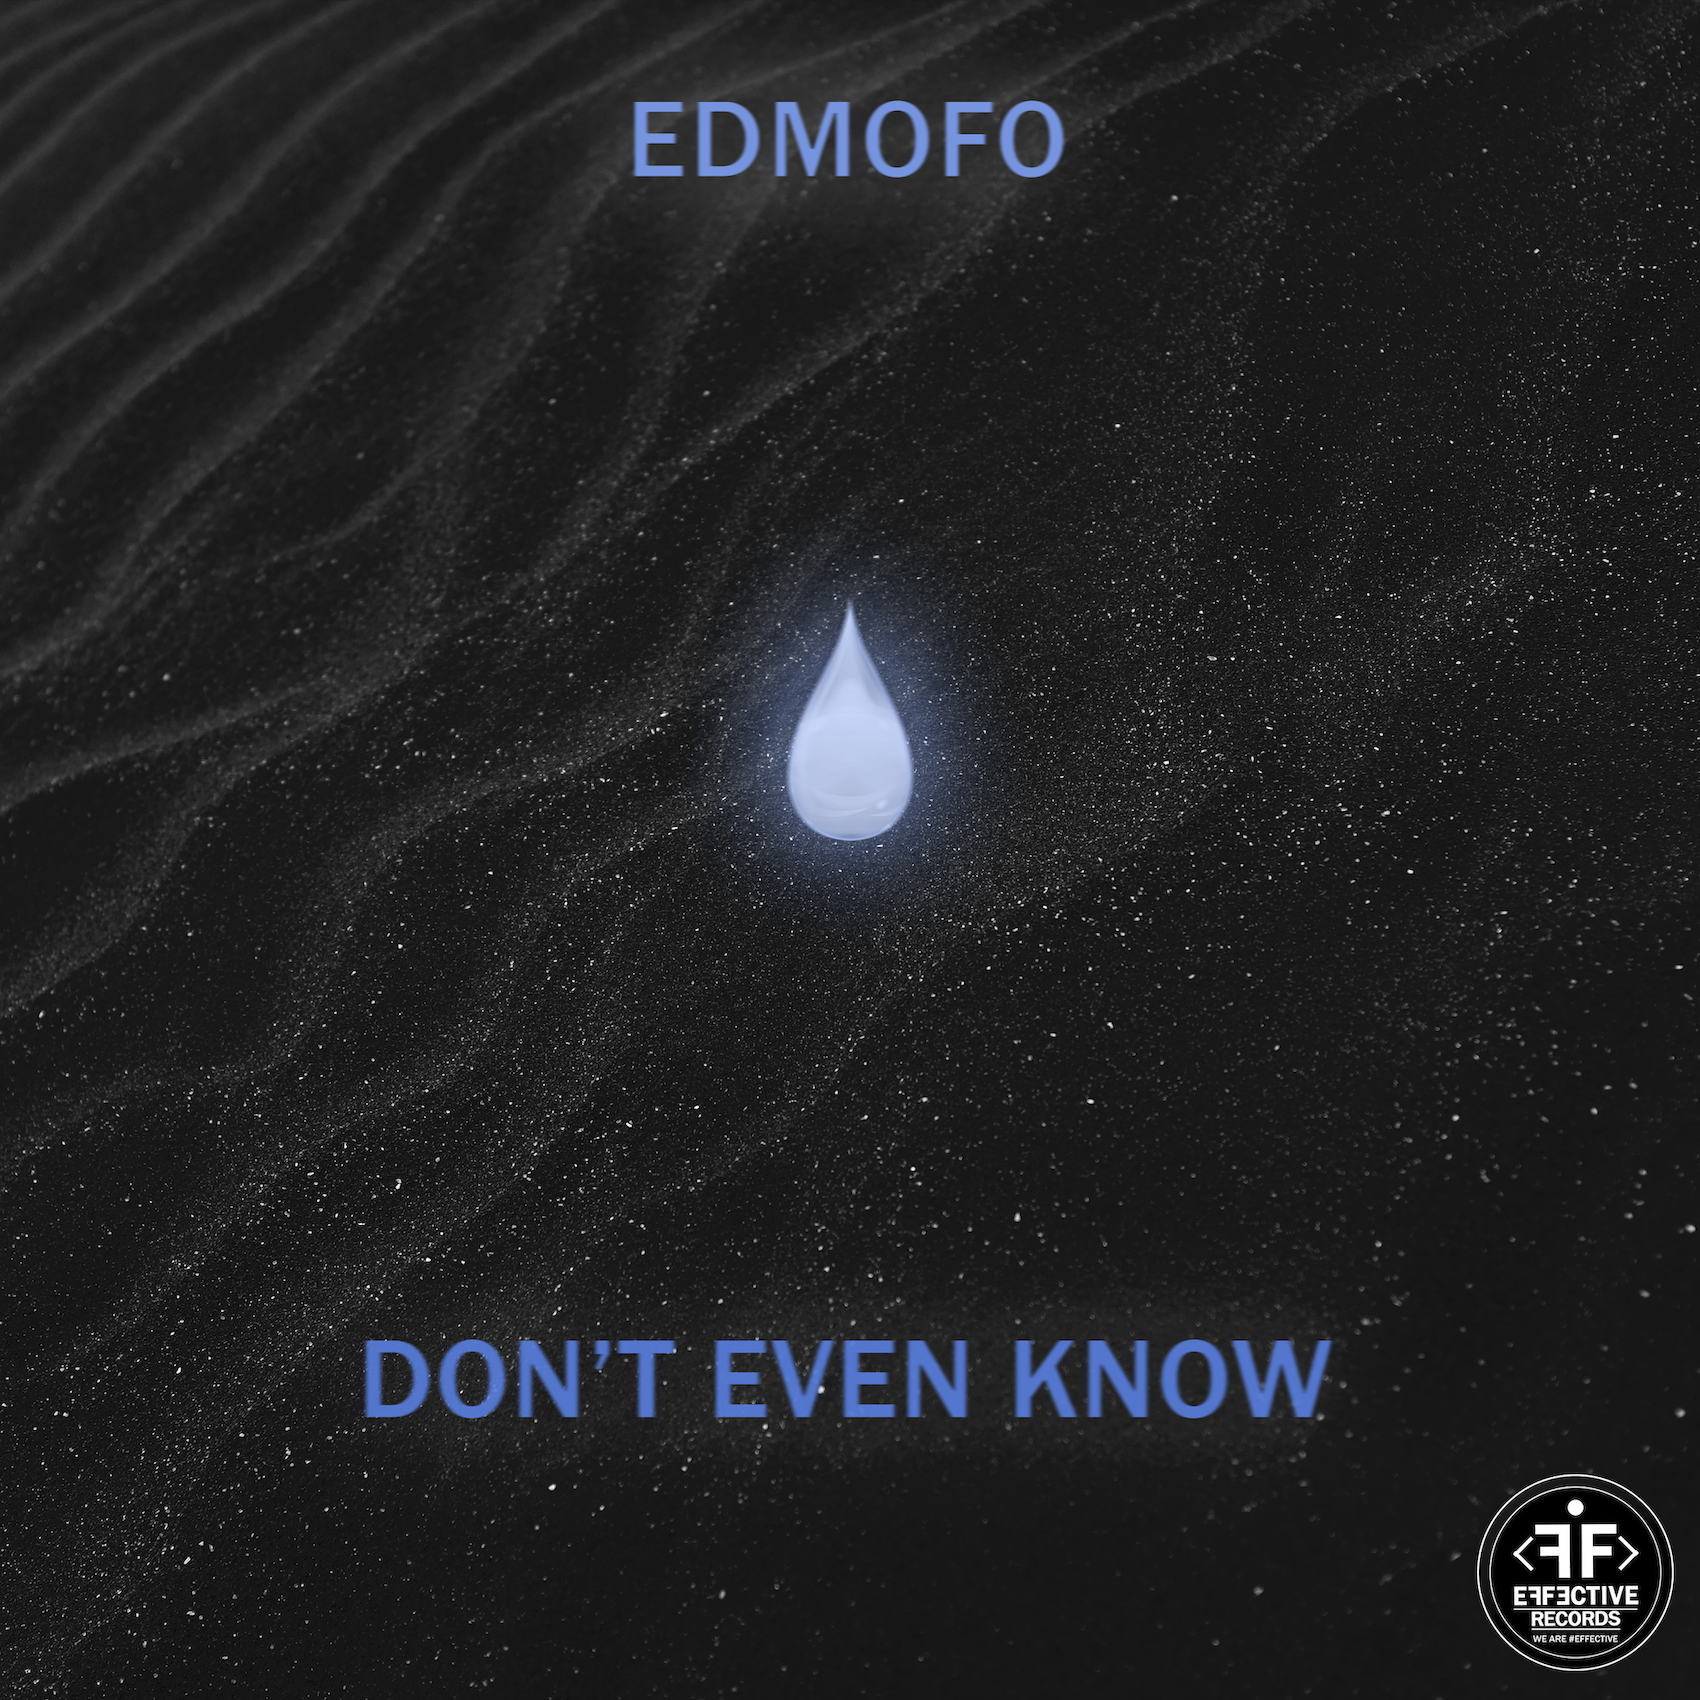 Fous edmofo remix. Edmofo-don't even know. Fous edmofo Remix Emma Peters перевод. Edmofo Mek альбом.